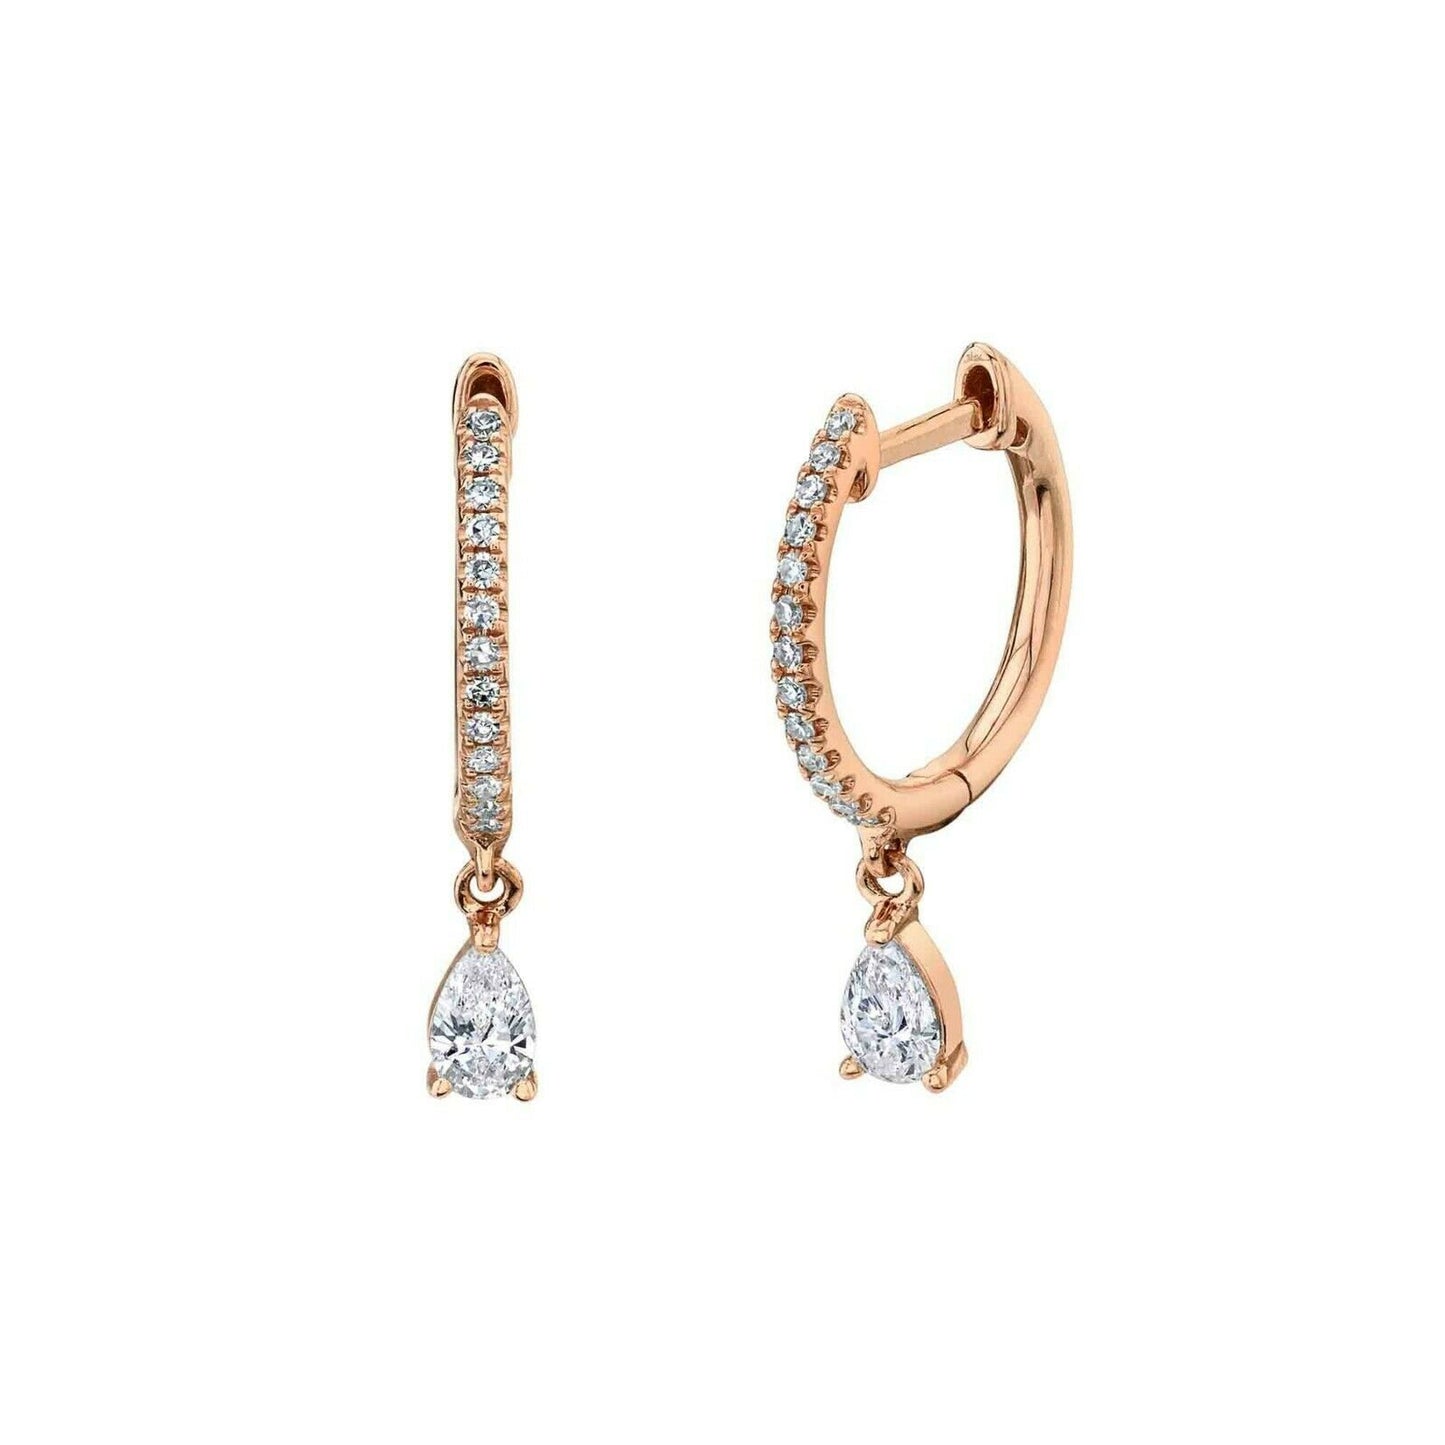 14K Gold 0.33CT Pear Cut Diamond Drop Earrings Huggie Dangle